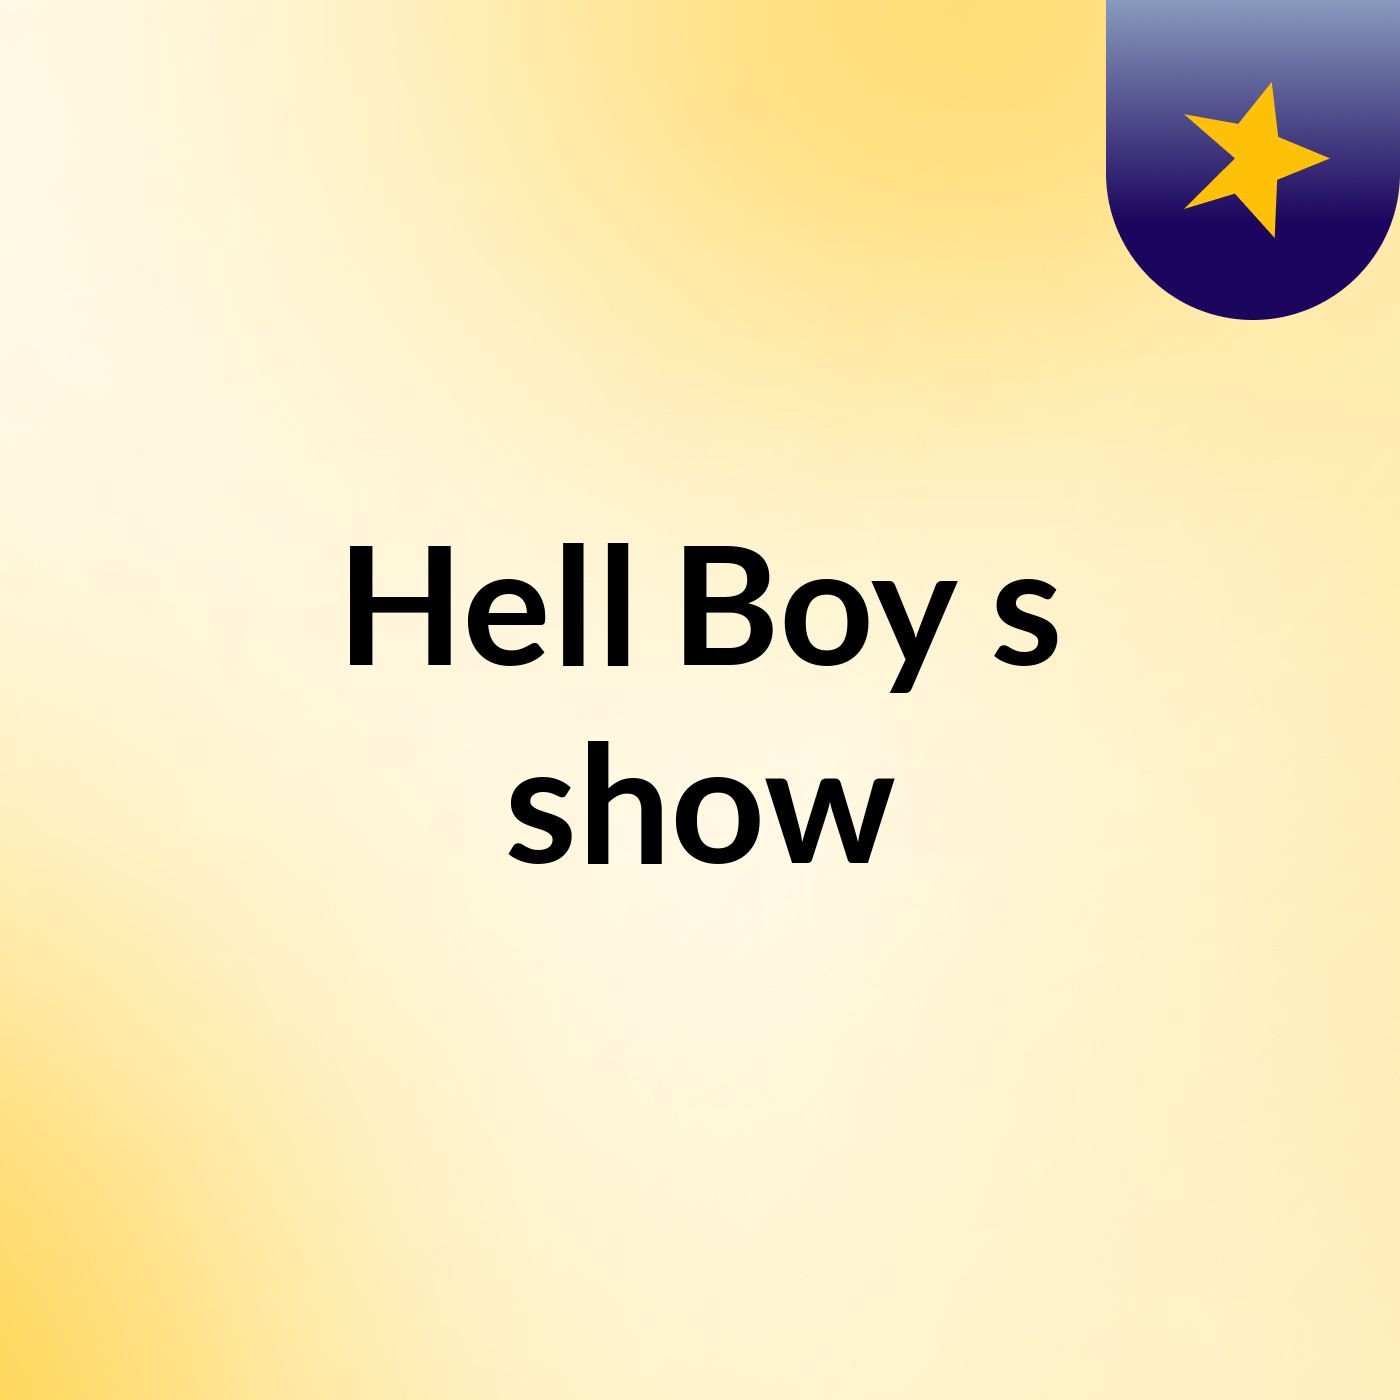 Hell Boy's show